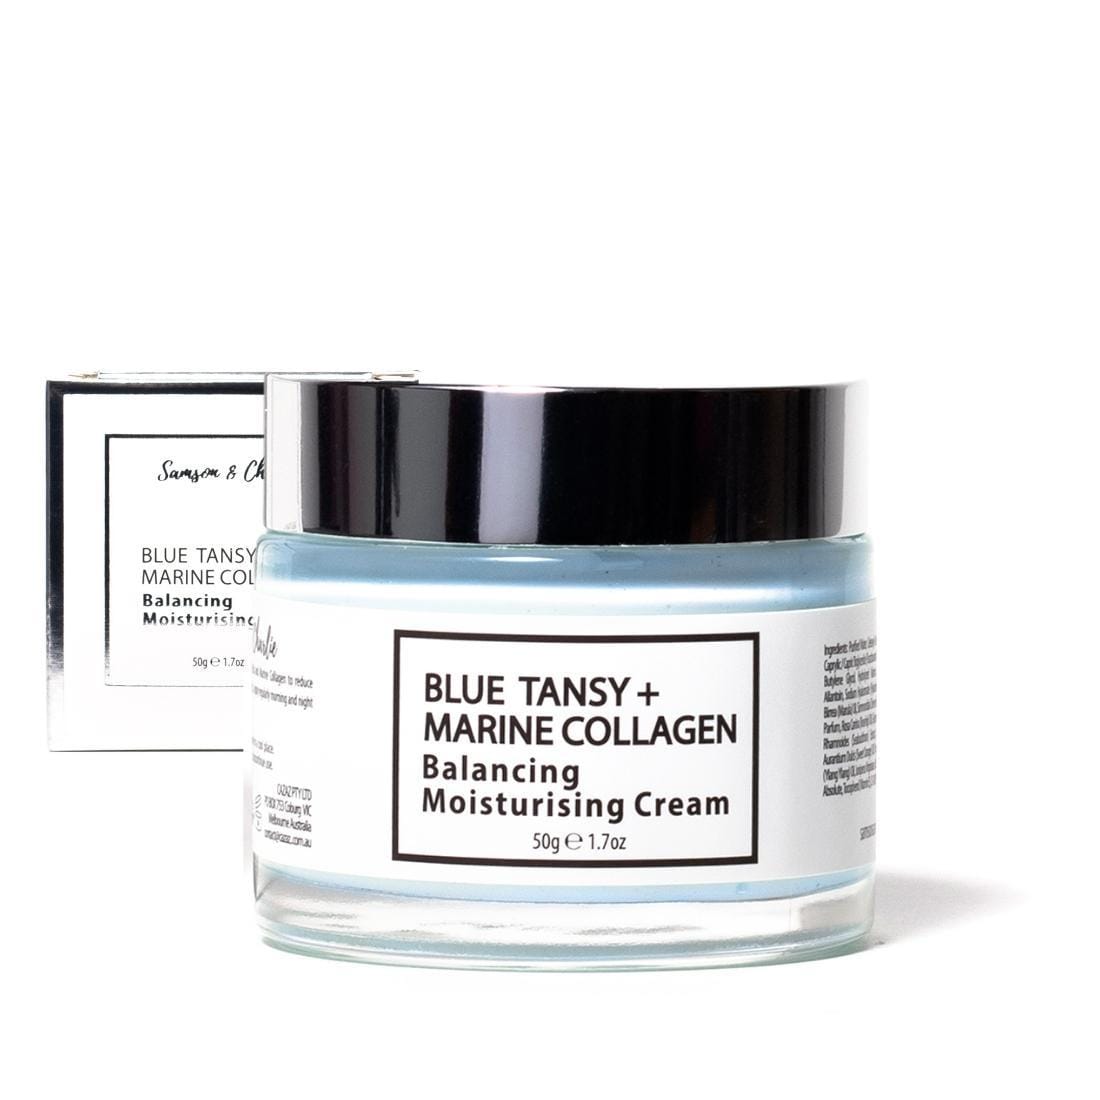 Samson & Charlie Moisturising Cream Blue Tansy + Marine Collagen Balancing Moisturising Cream